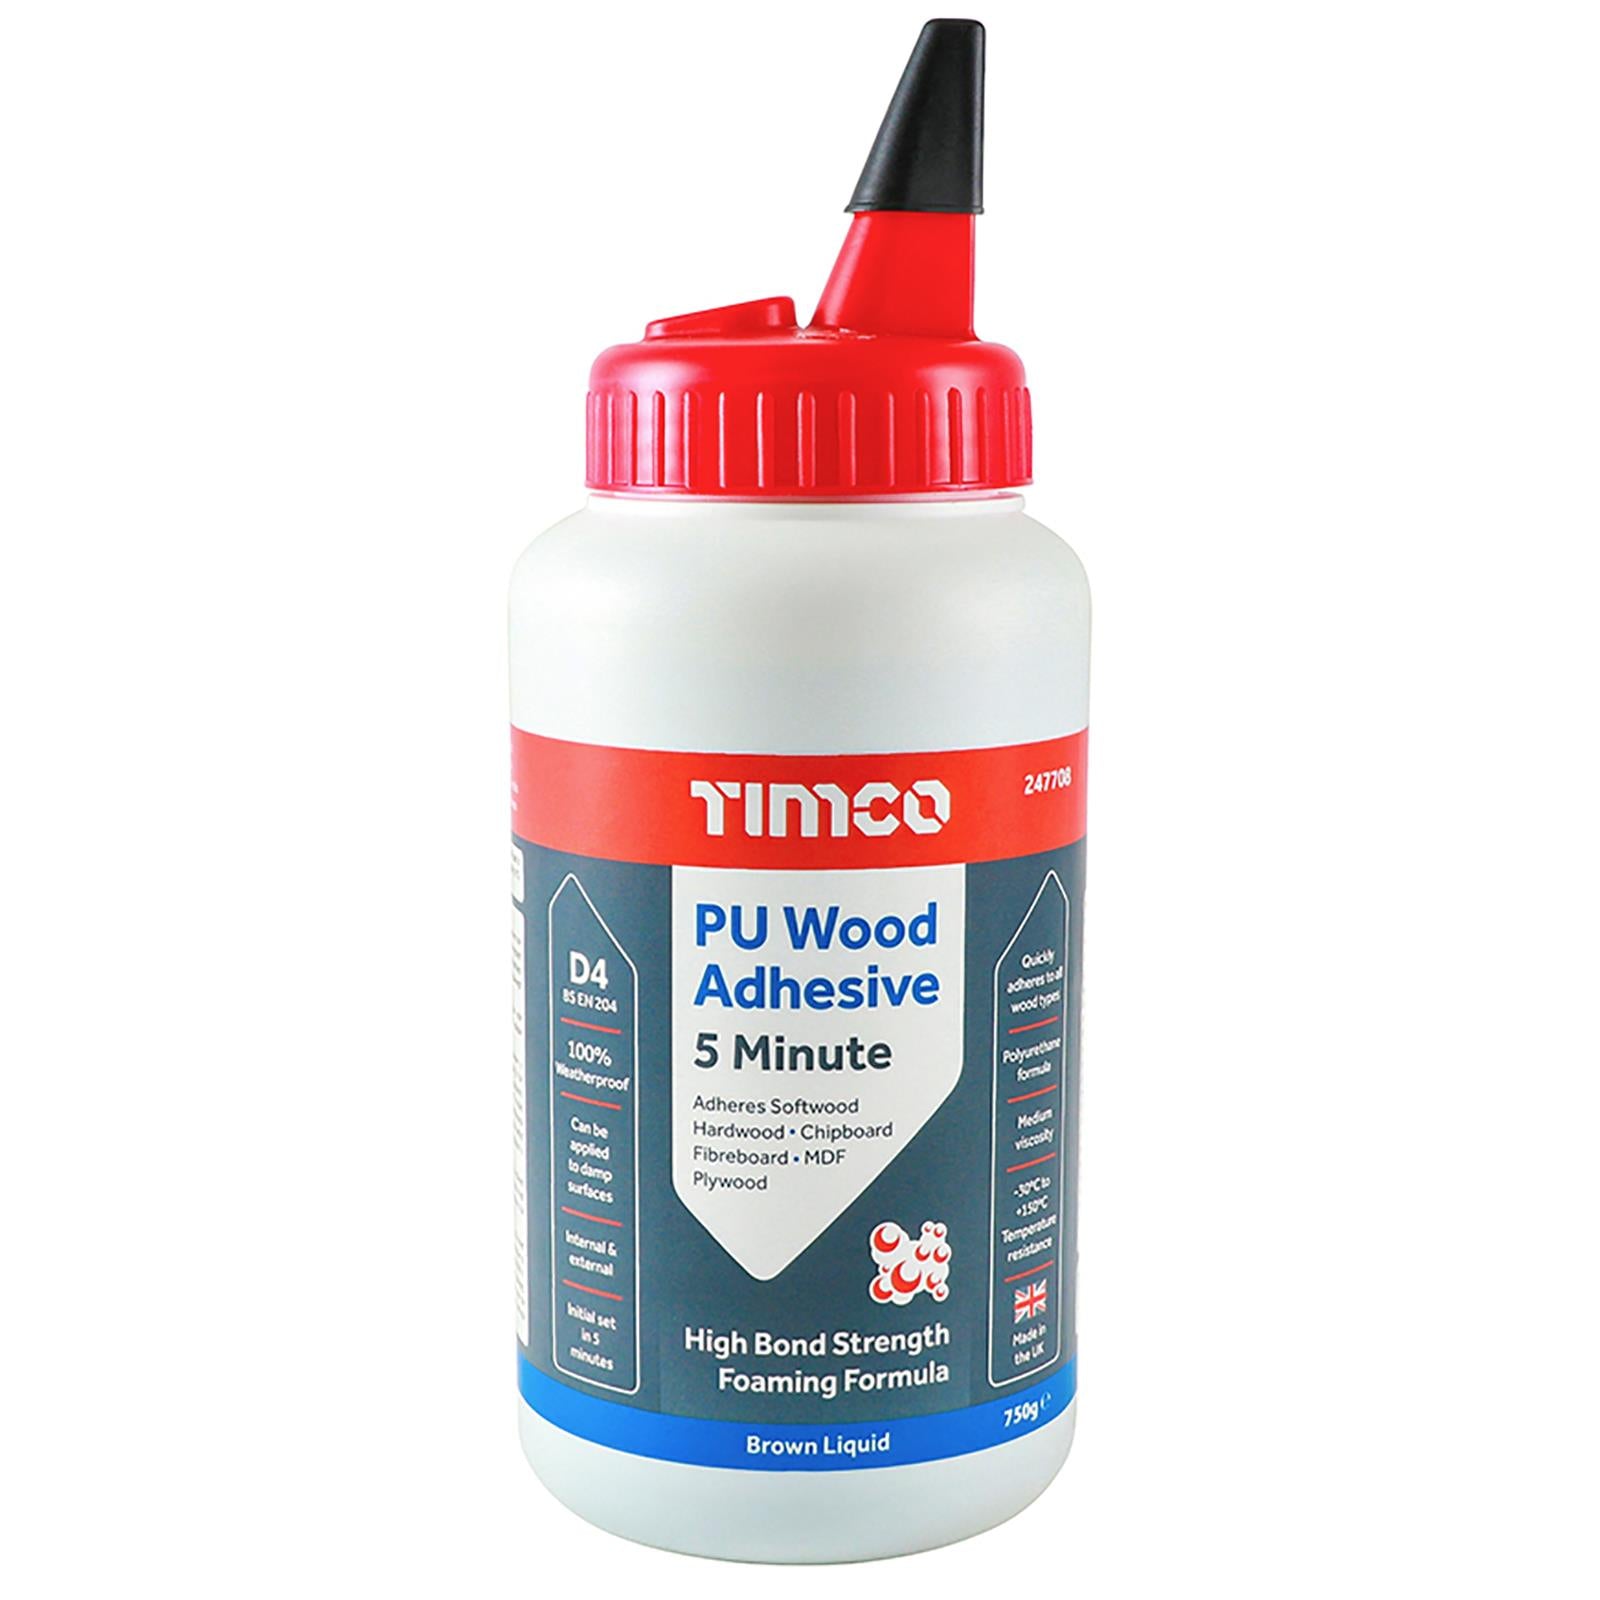 TIMCO PU Wood Adhesive Glue 5 Minute 750g Brown Liquid